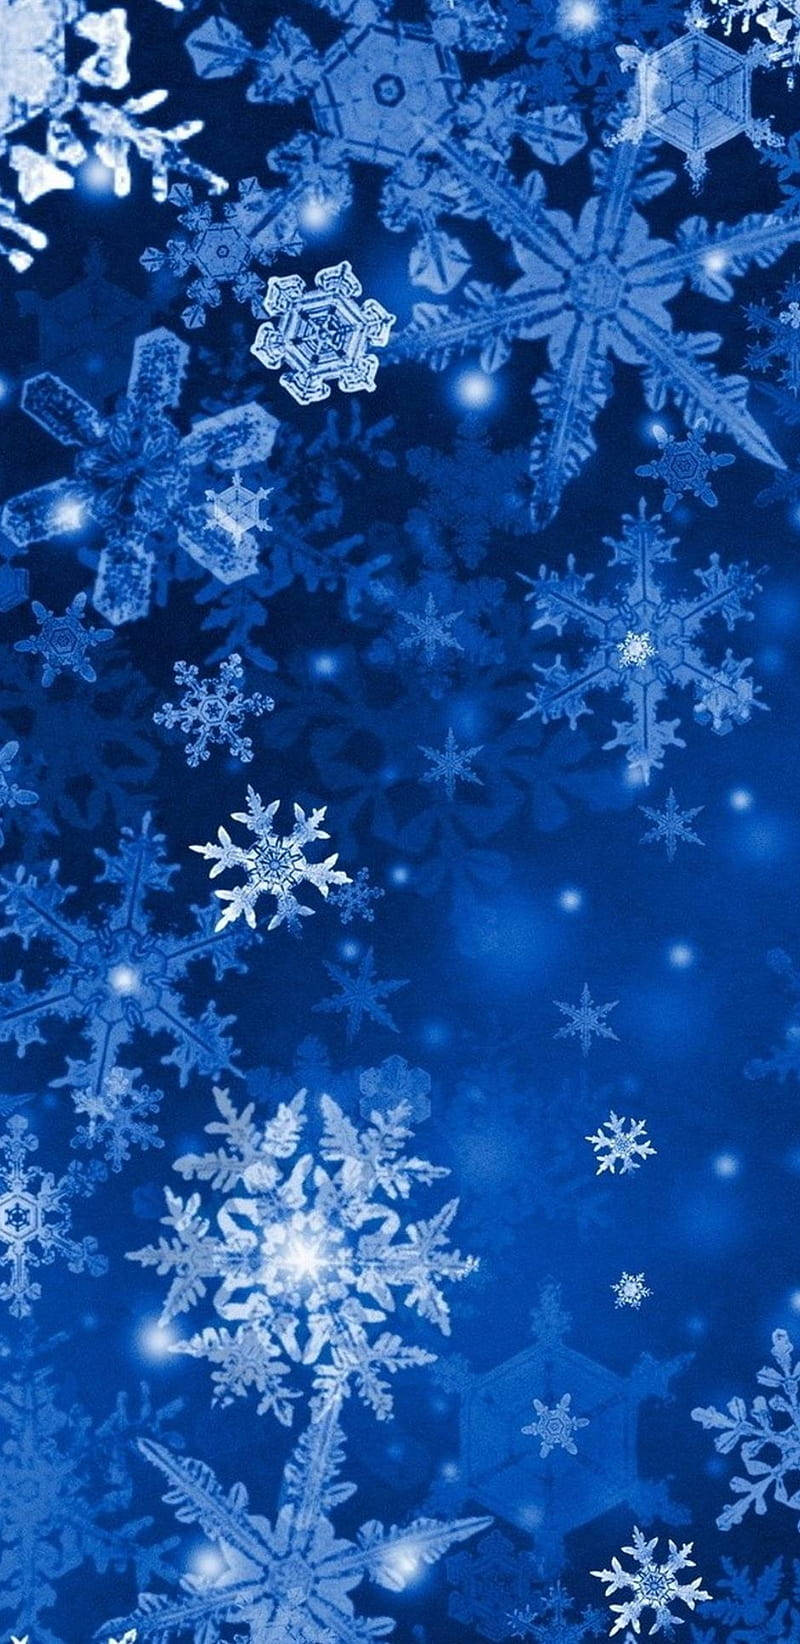 Oplev naturen gennem din telefon med Snowflake Iphone Wallpaper! Wallpaper